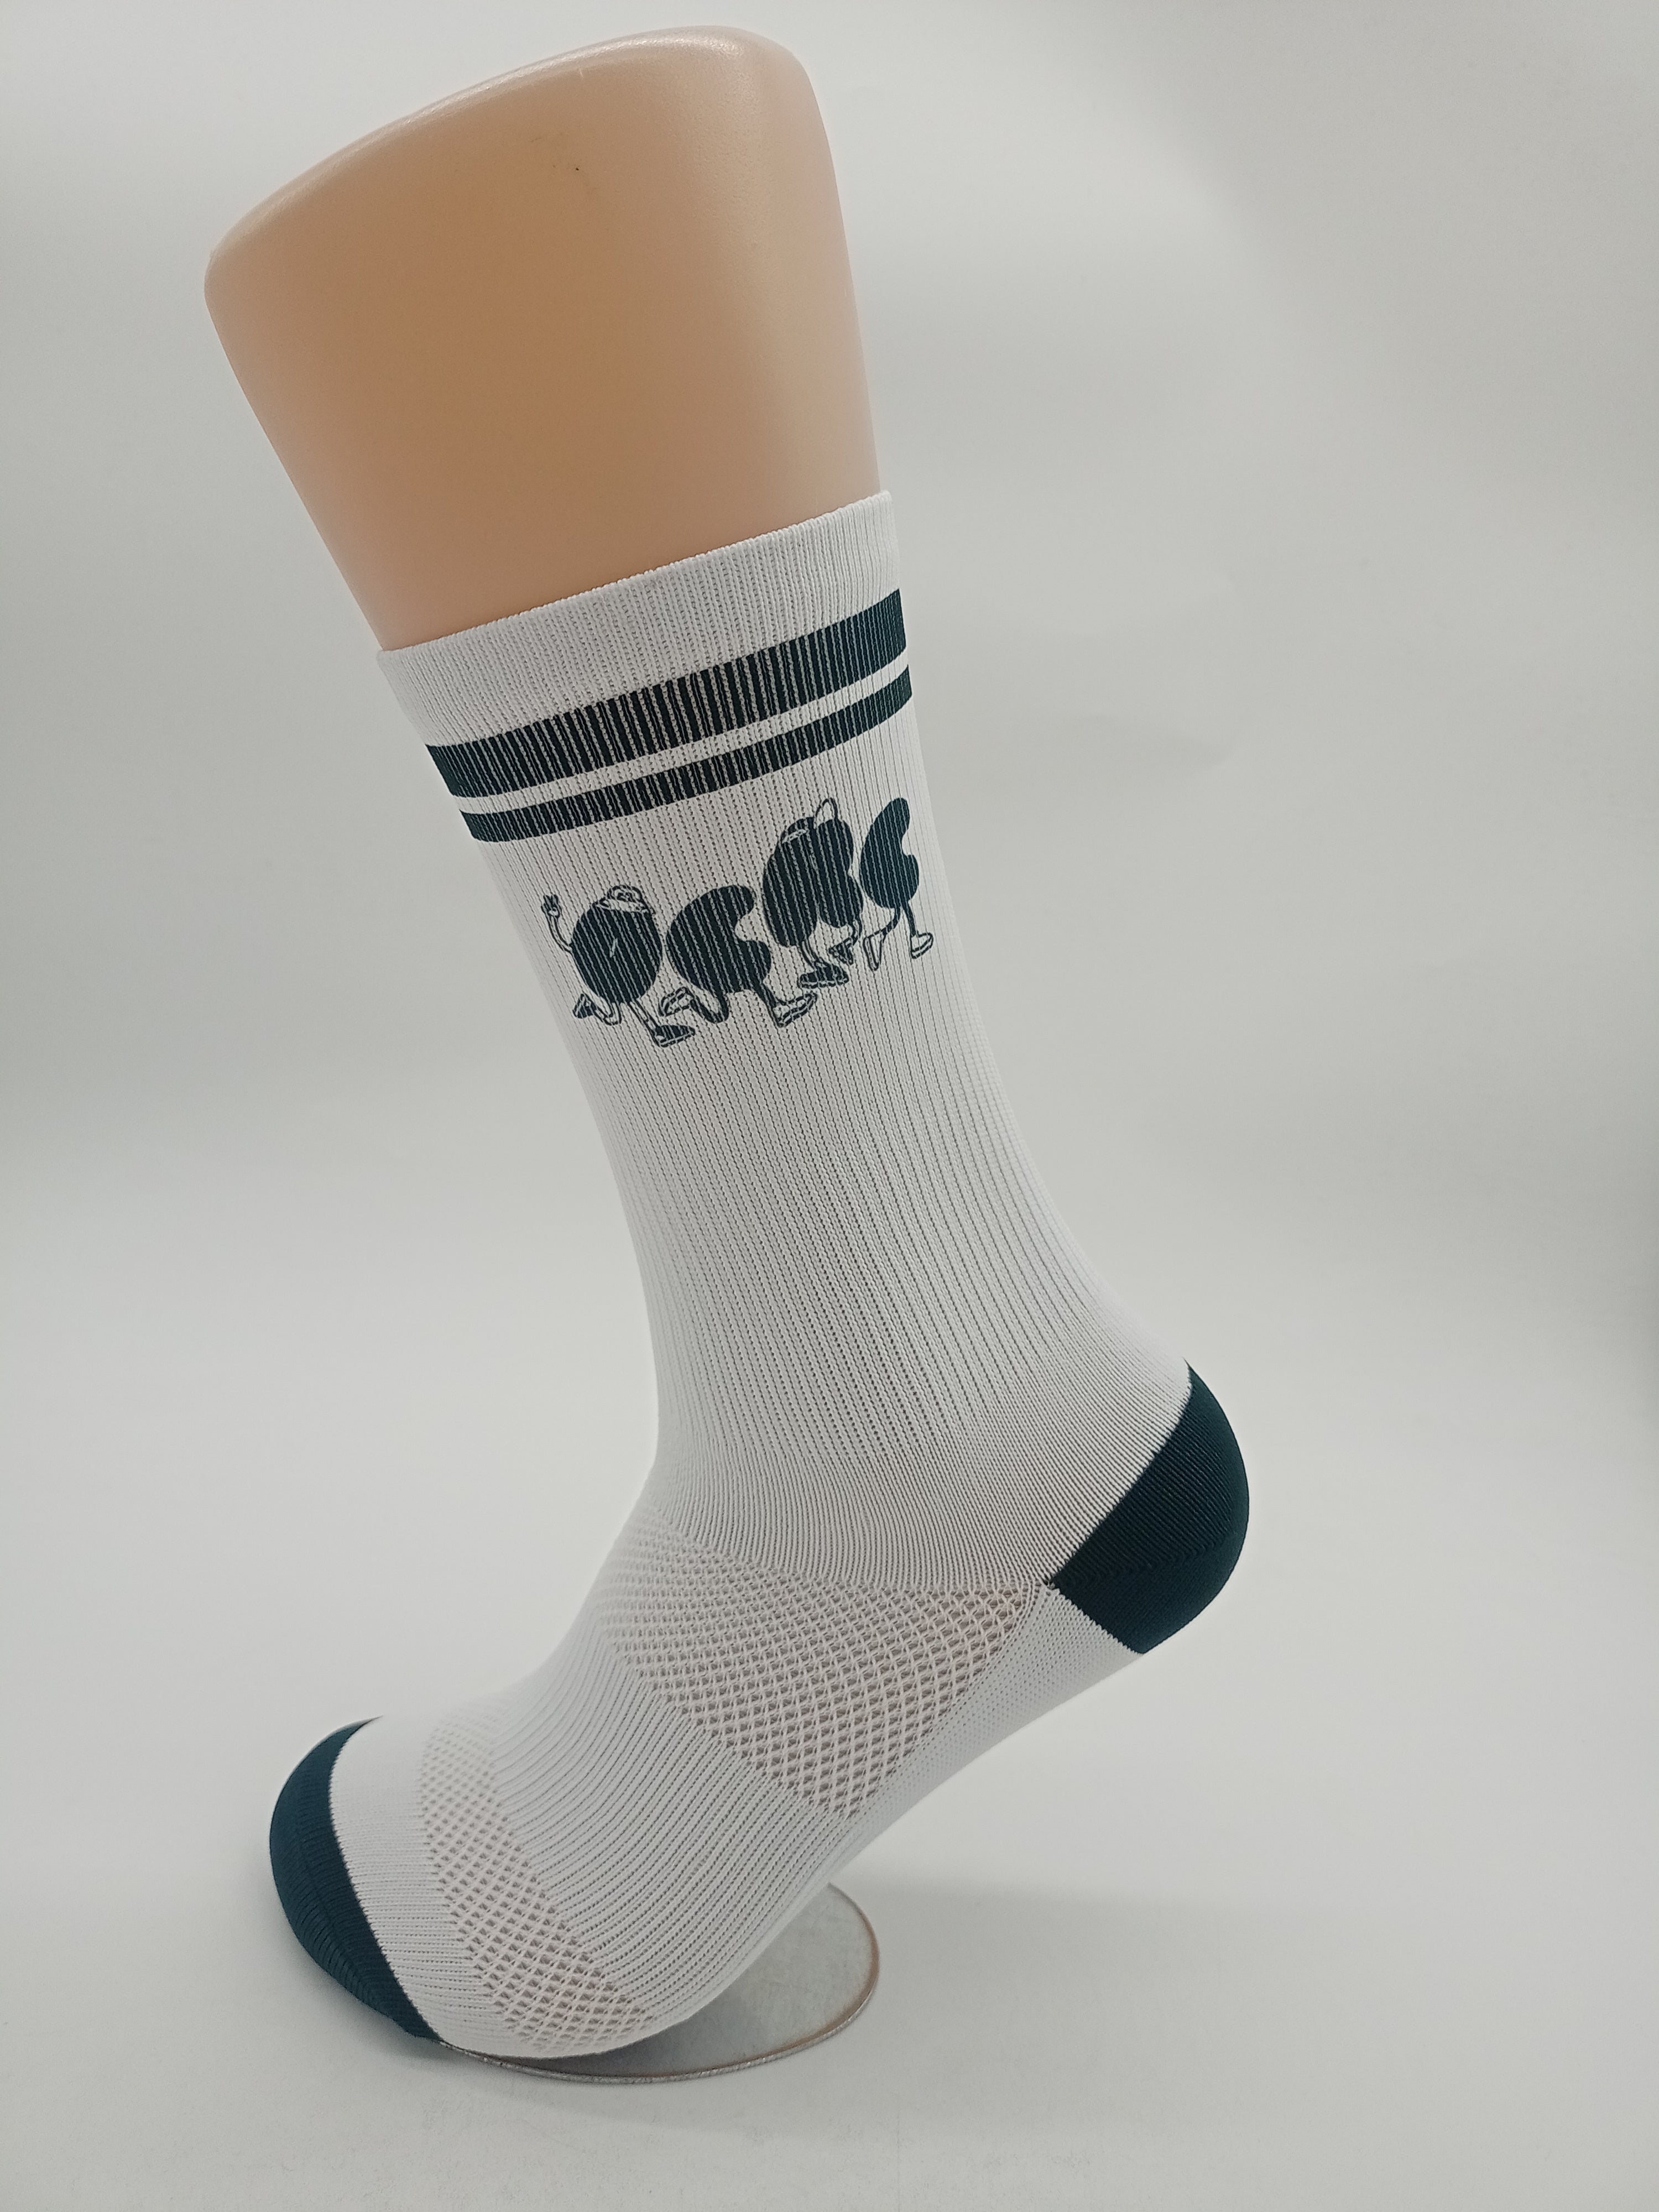 OrrinSports Toe Socks for Men Women Coolmax Crew Socks 3 Pairs Running Socks  Athletic Breathable Five Finger Socks, Black-b4# Crew/3 Pairs, Small :  : Clothing, Shoes & Accessories